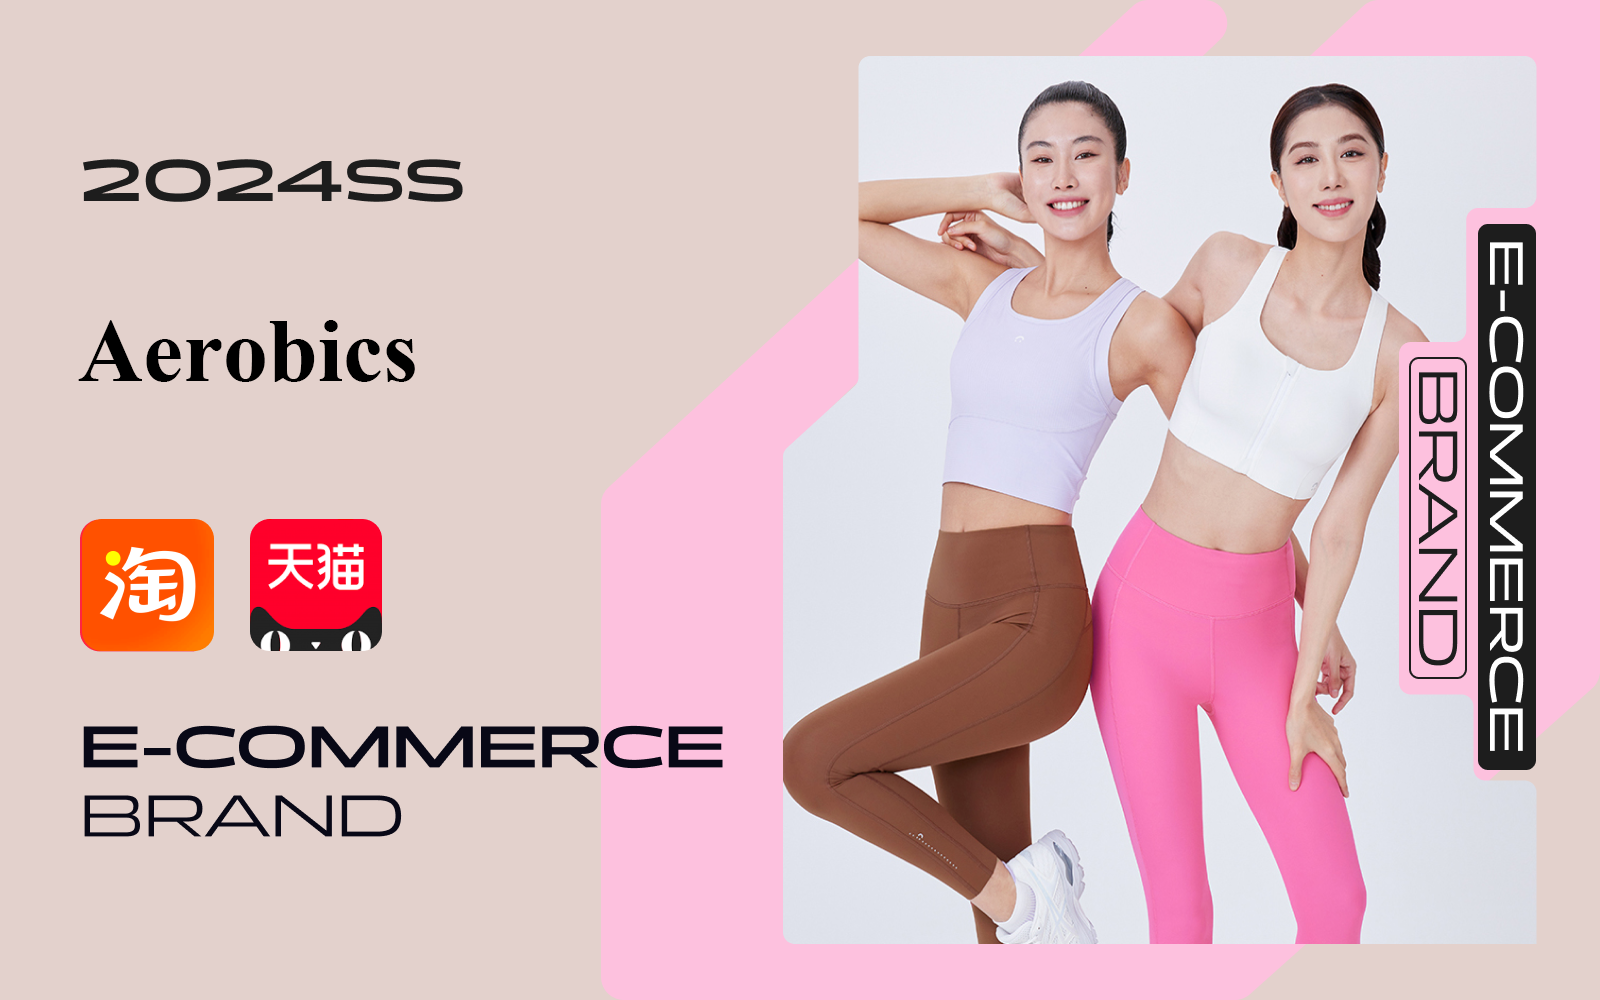 Aerobics -- The Comprehensive Analysis of Yogawear E-commerce